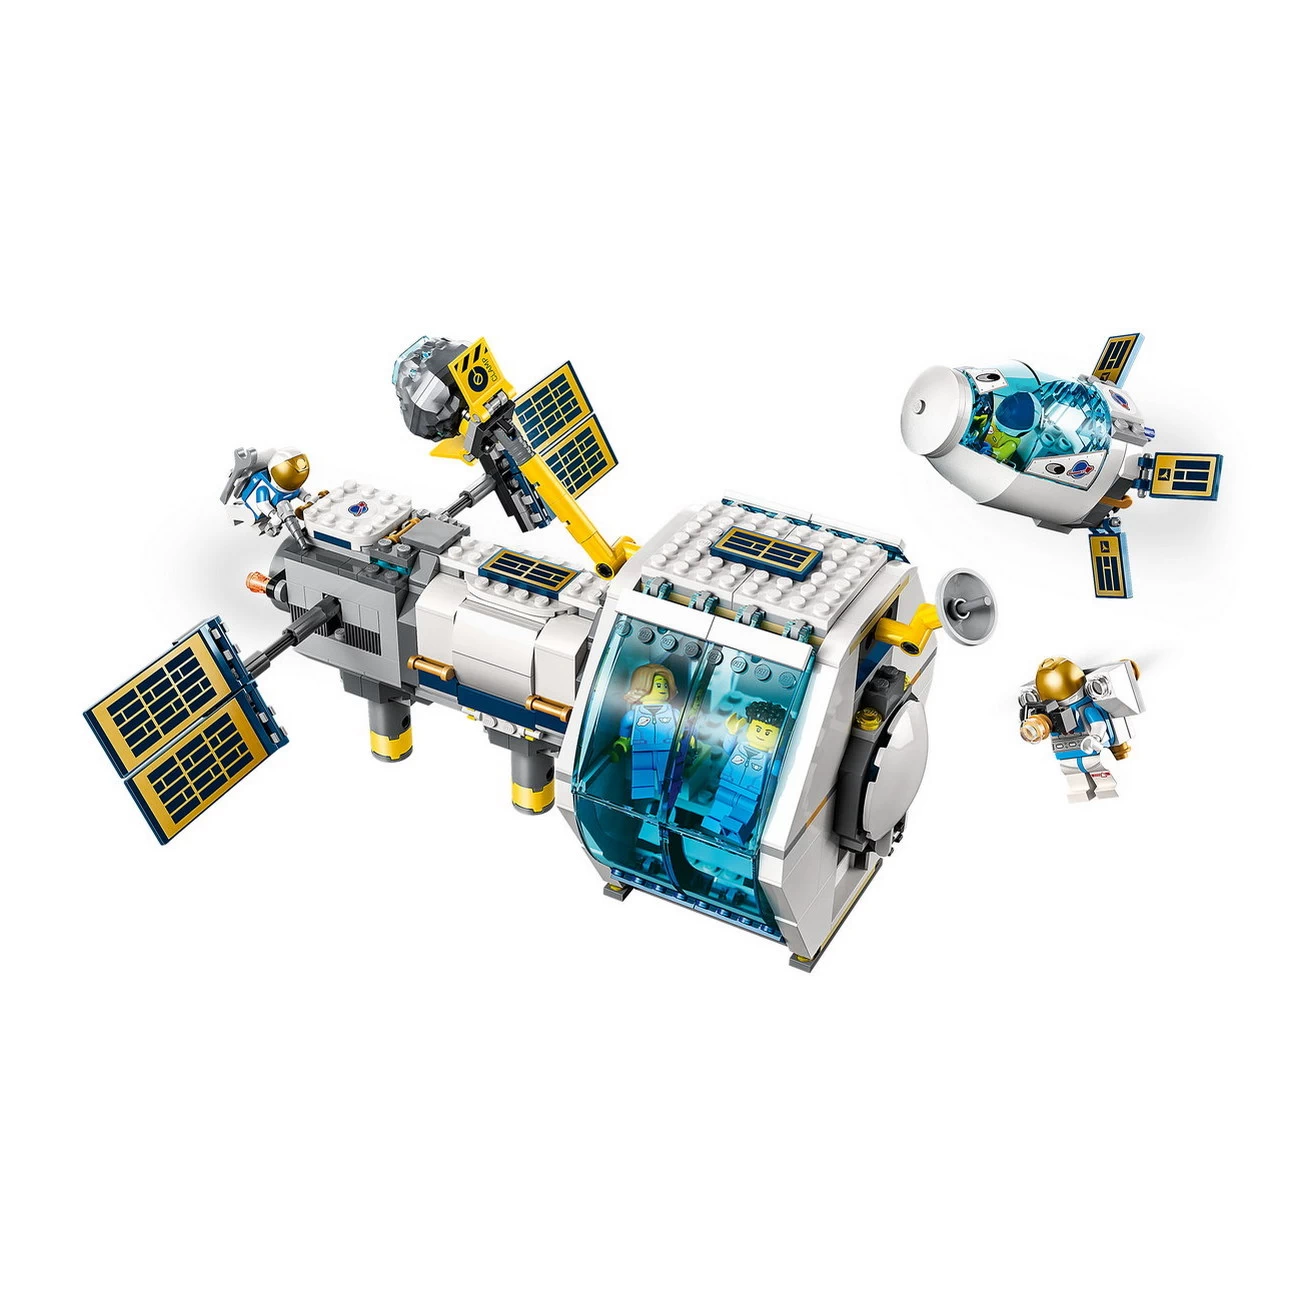 LEGO City (60349) Mond-Raumstation